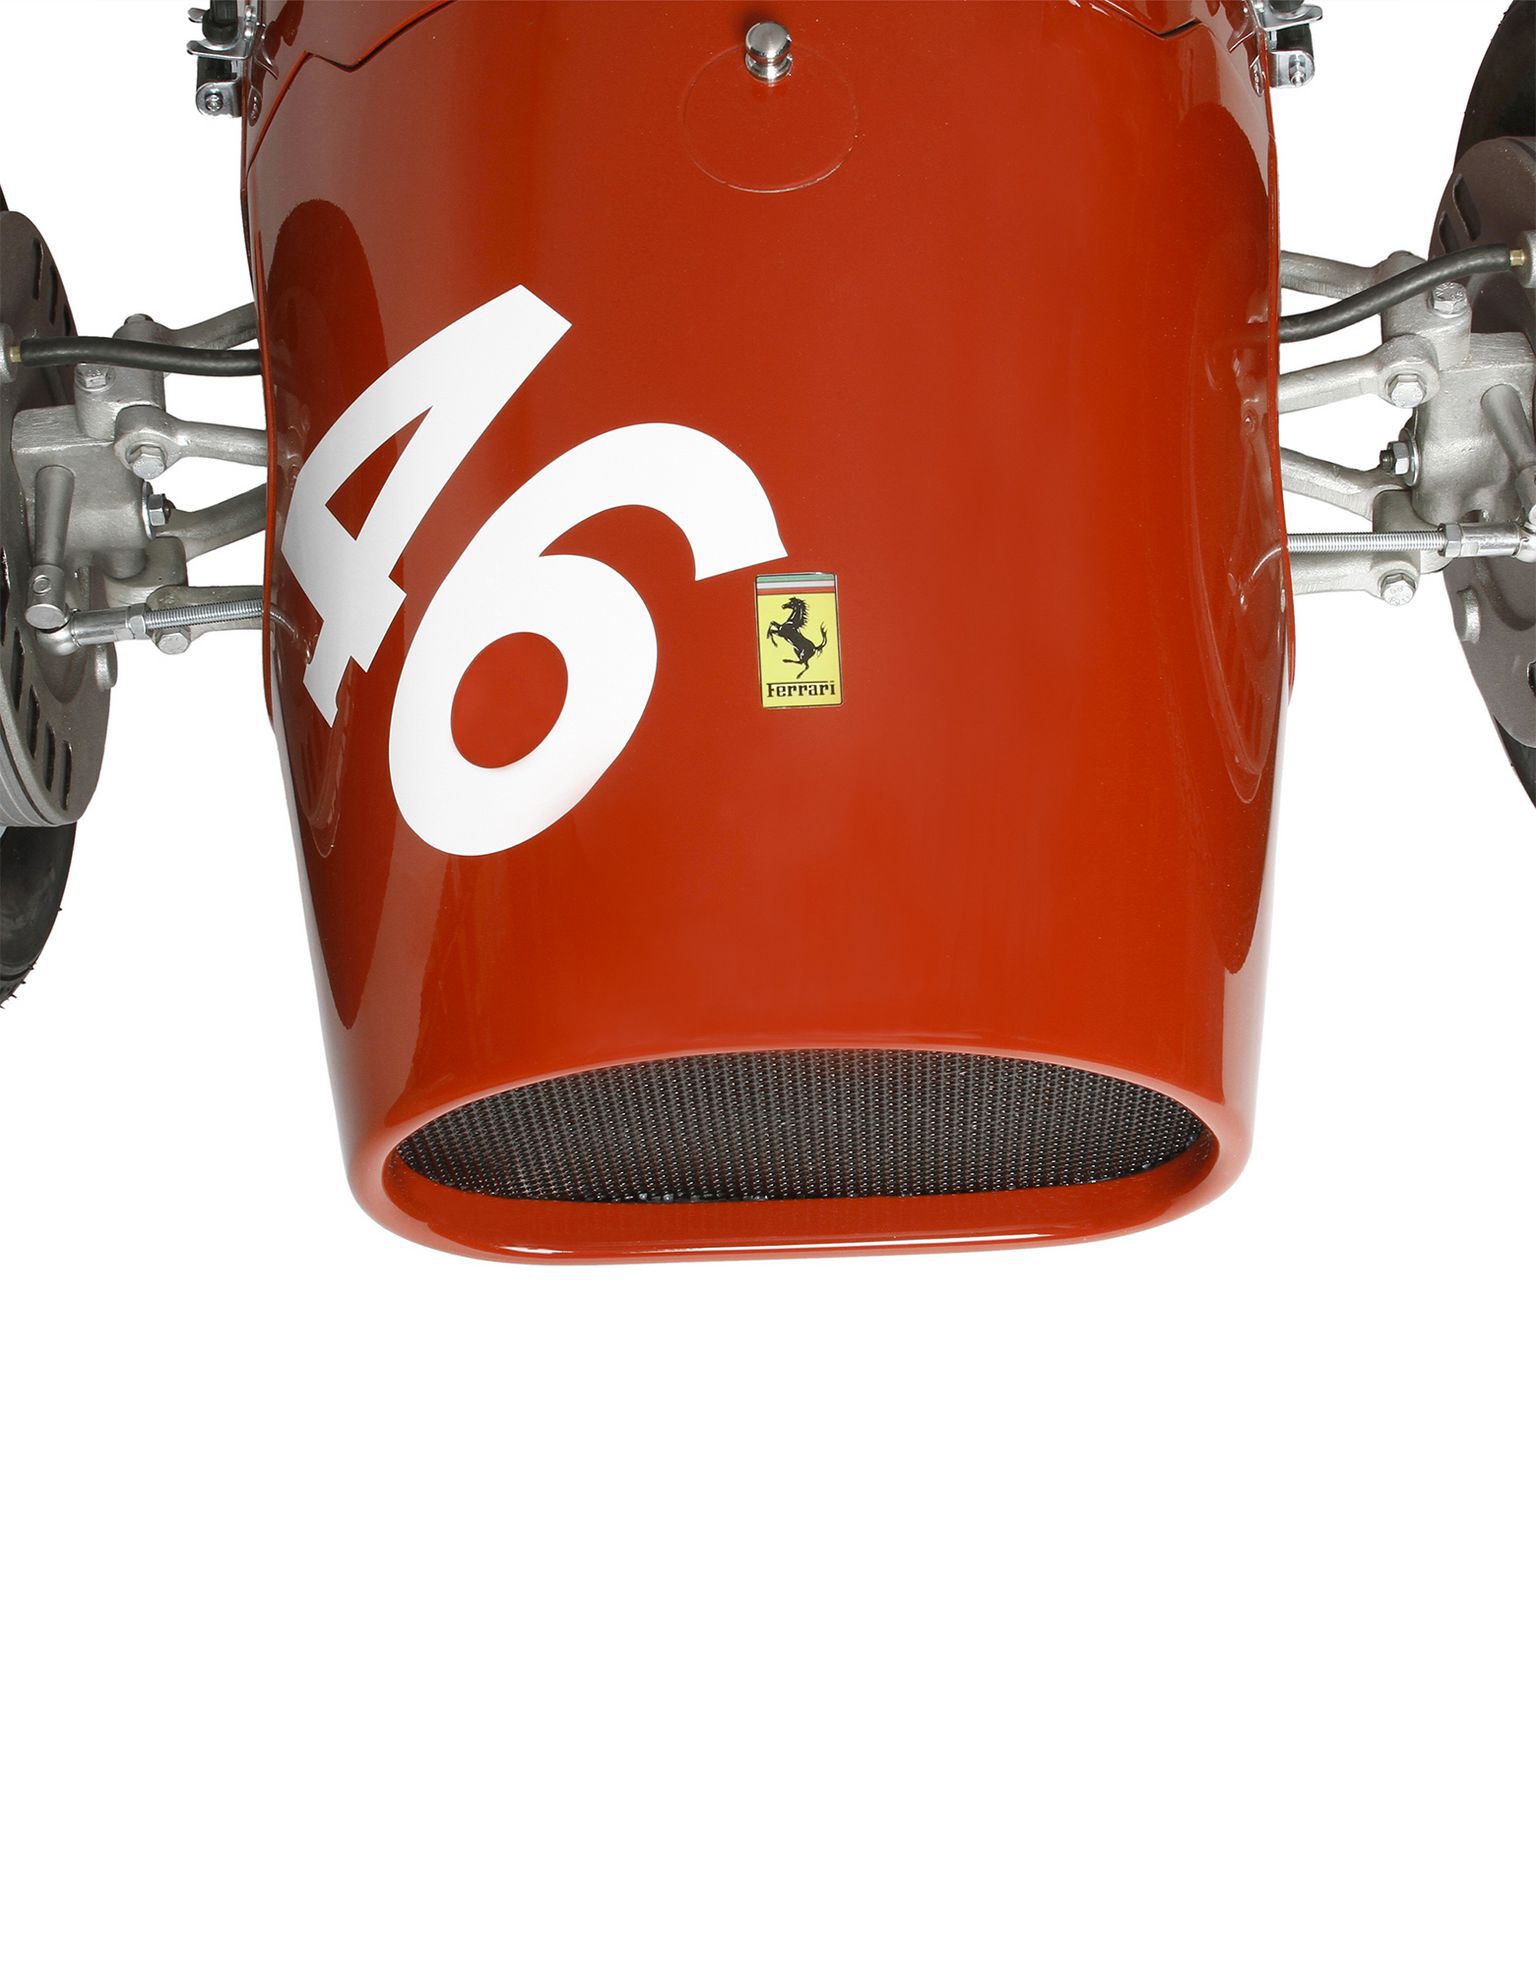 Ferrari Reproduktion Ferrari 500 F2 im Maßstab 1:1,8 MEHRFARBIG 43169f